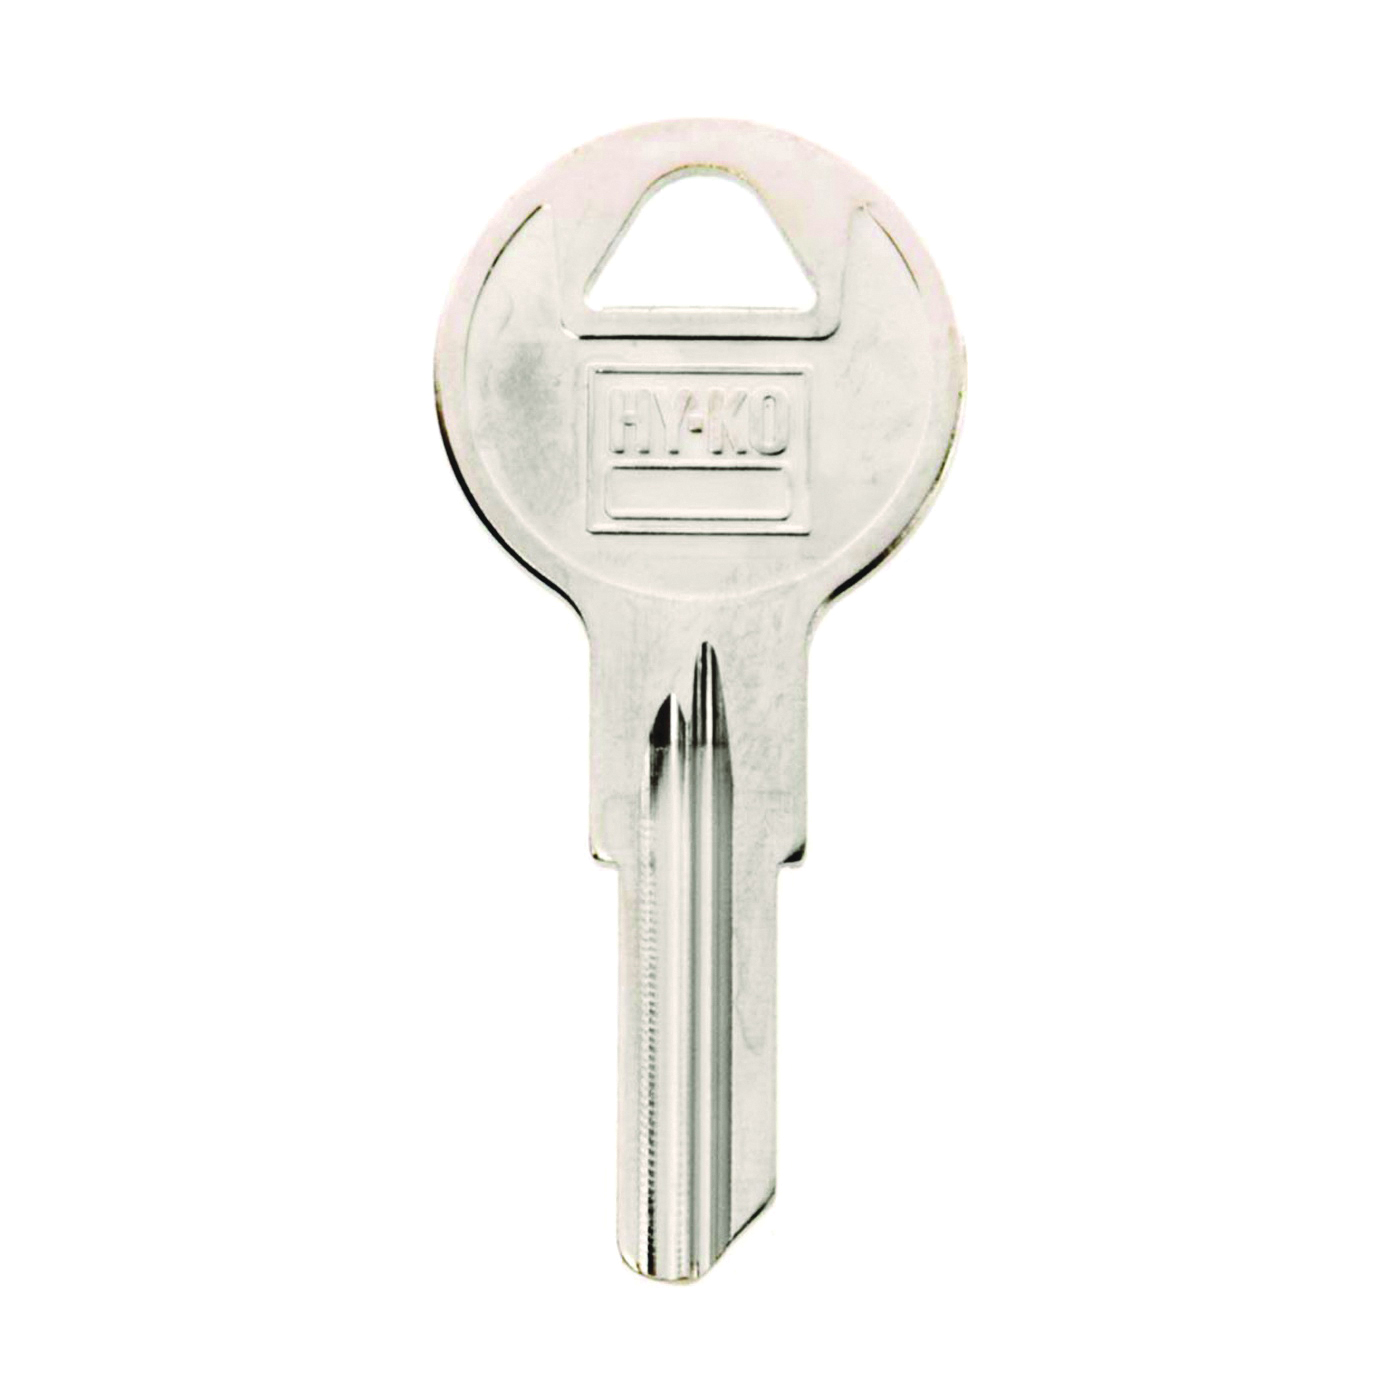 HY-KO 11010B5 Key Blank, Brass, Nickel, For: Briggs and Stratton Cabinet, House Locks and Padlocks - 1